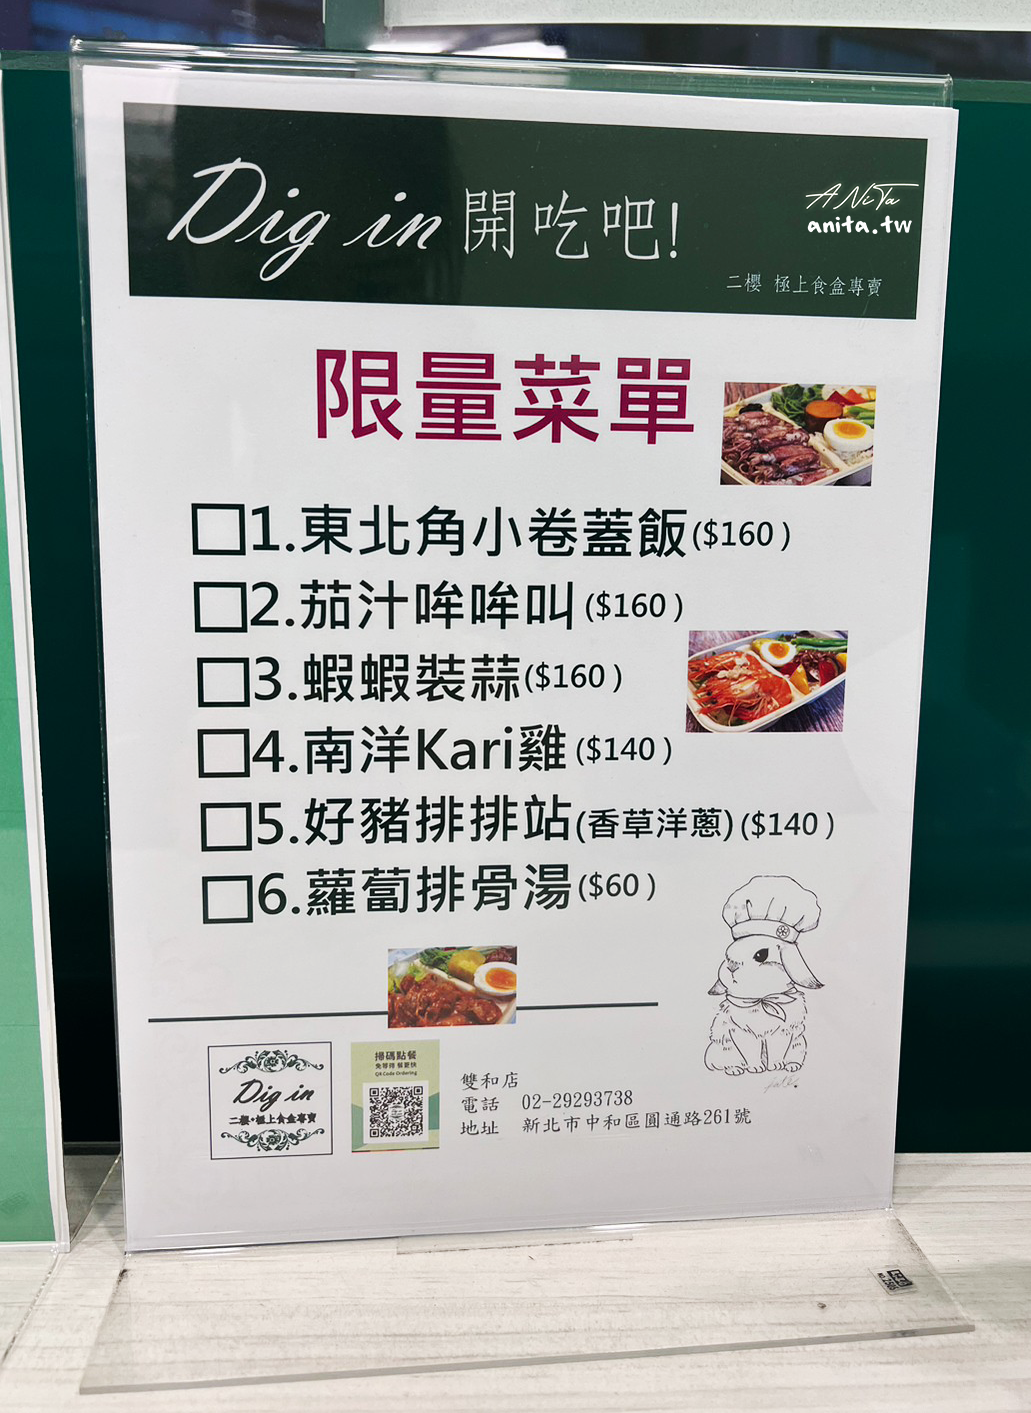 Dig in 二櫻極上食盒專賣,二櫻,二櫻極上食盒,健康餐盒